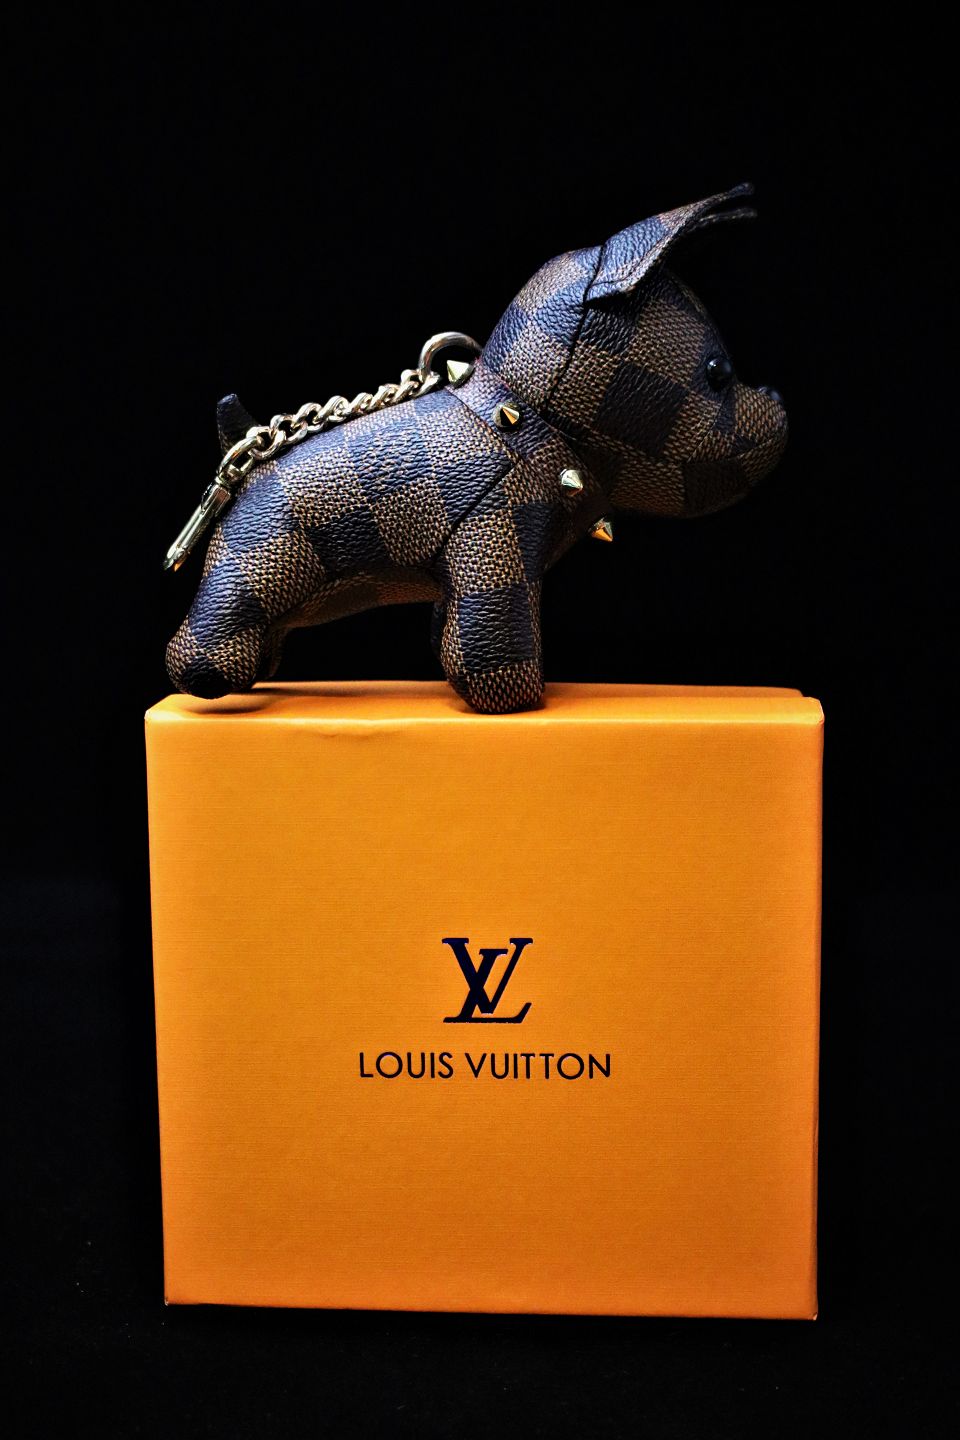  Original Louis Vuitton accessories, bag pendant